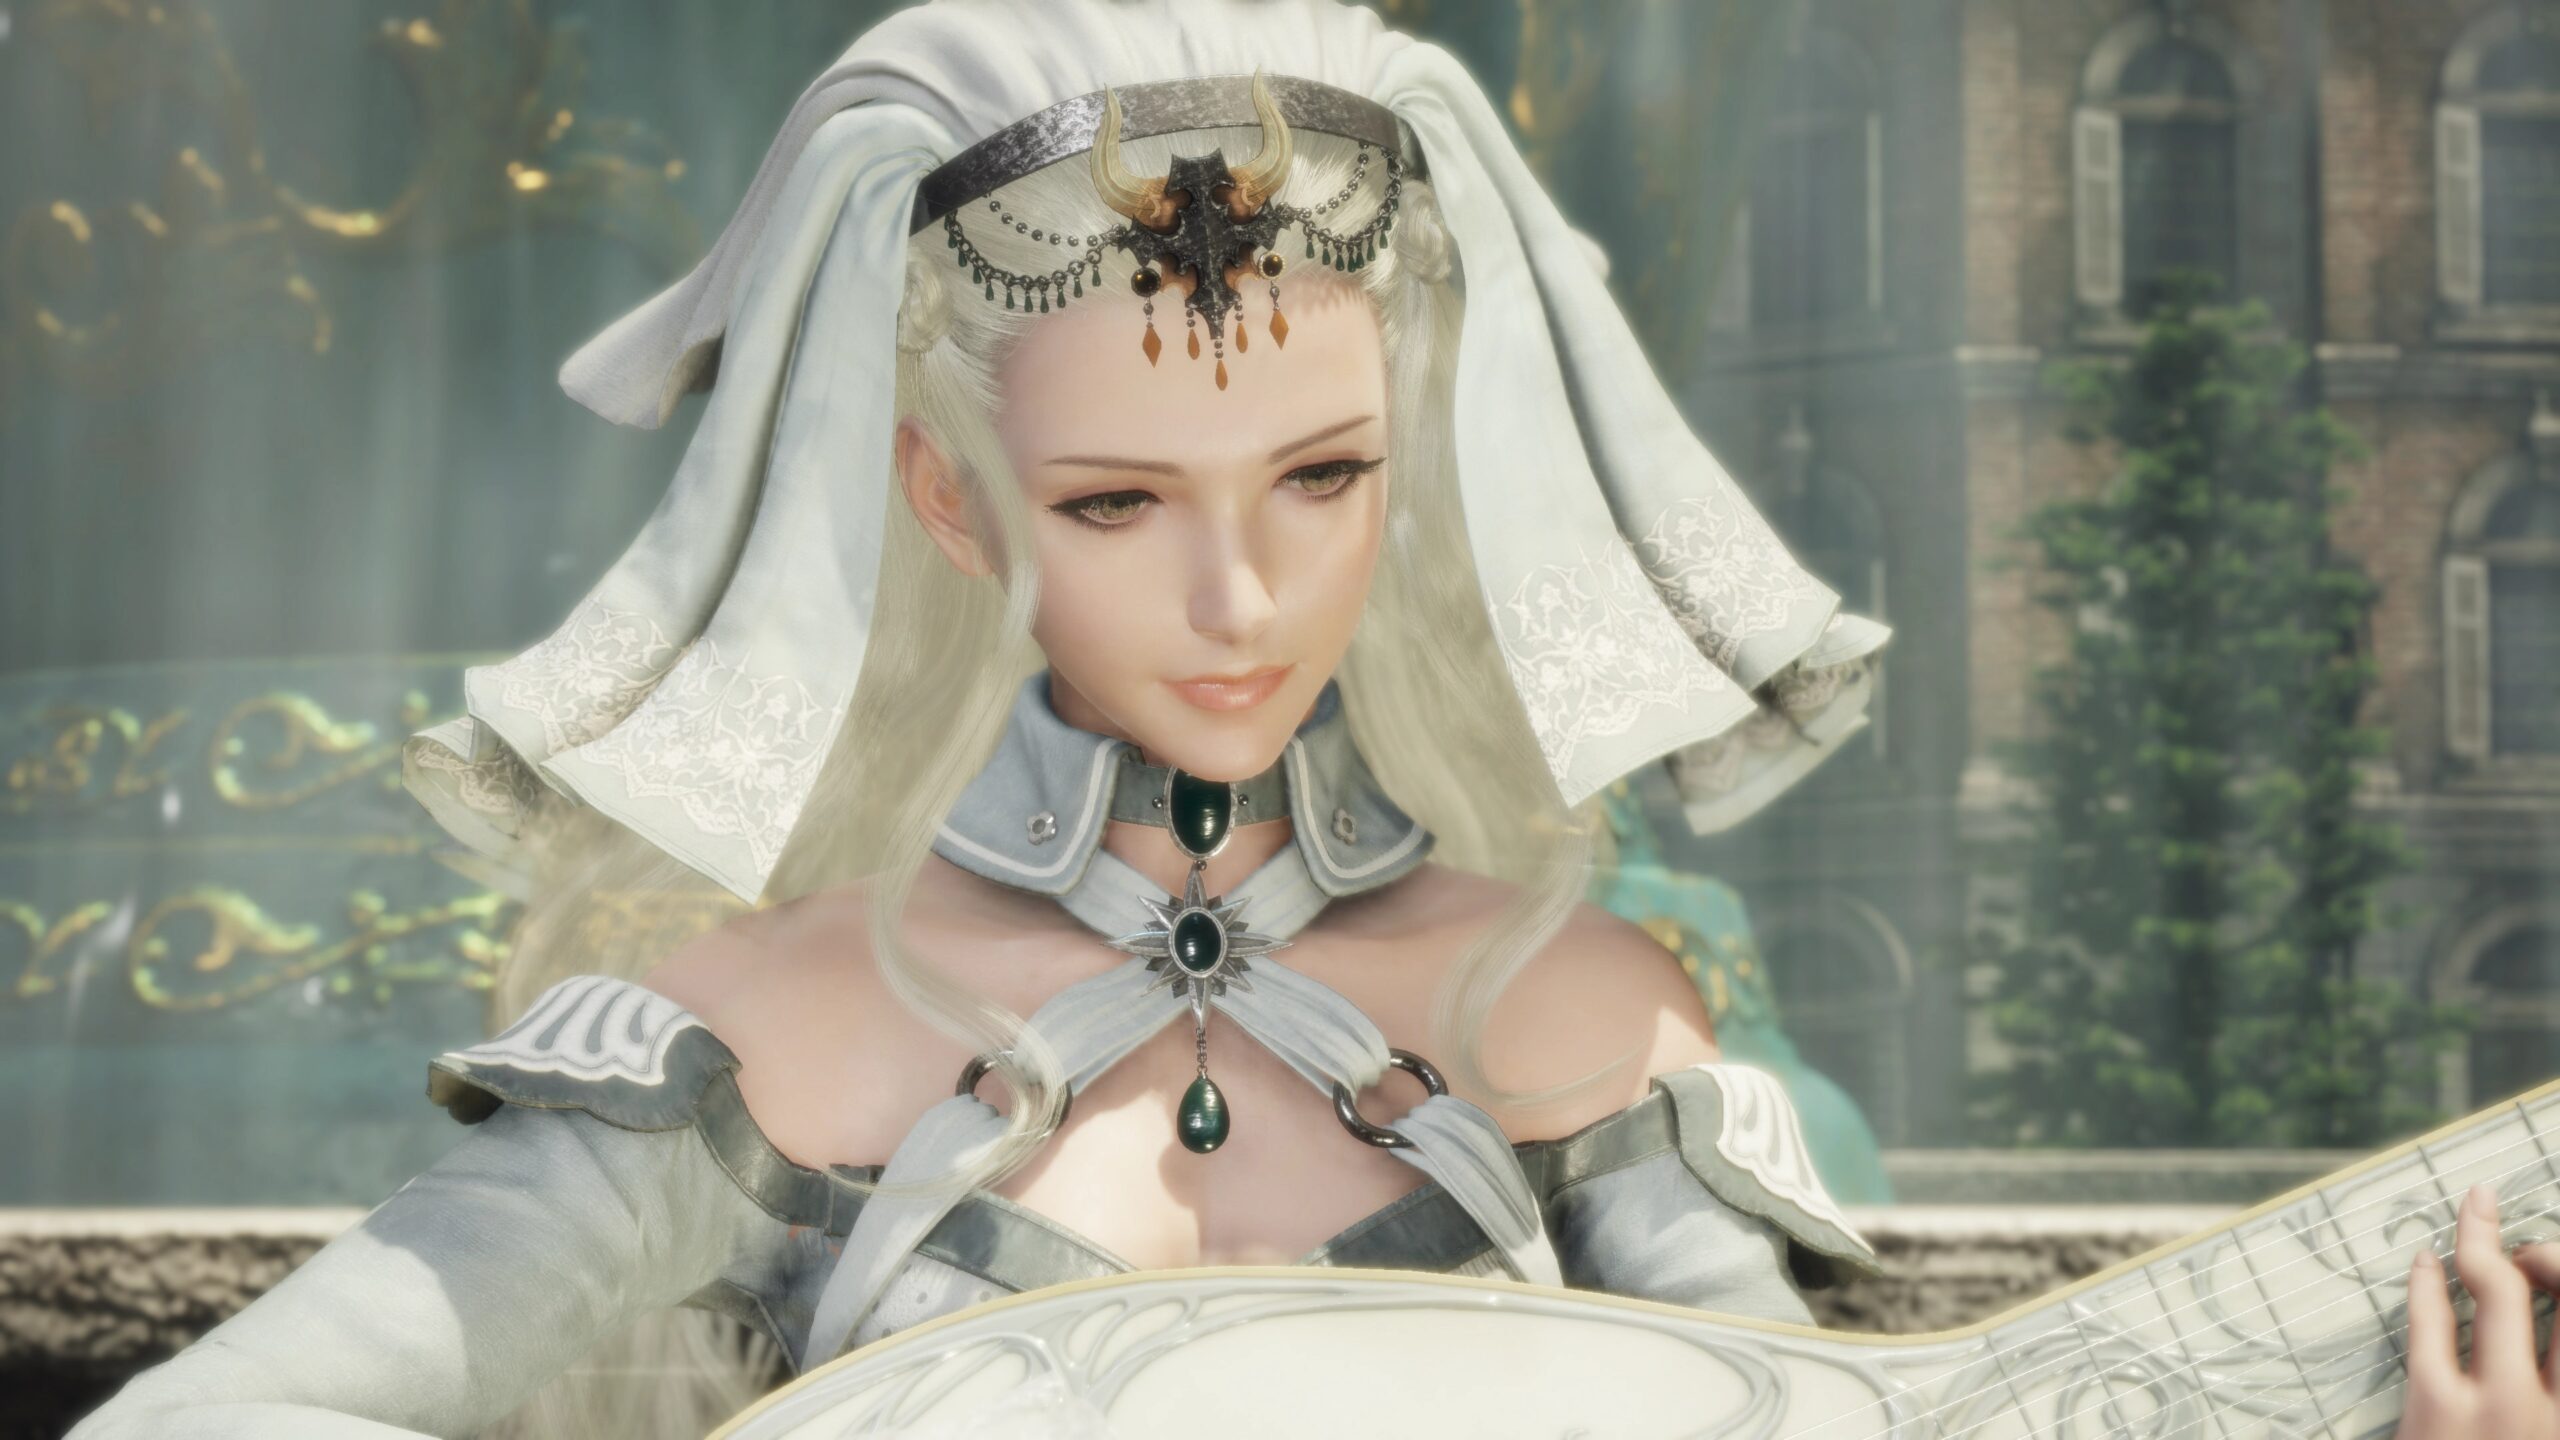 Stranger of Paradise: Final Fantasy Origin details Neon, Princess Sarah, battle actions, difficulty settings, more – Gematsu